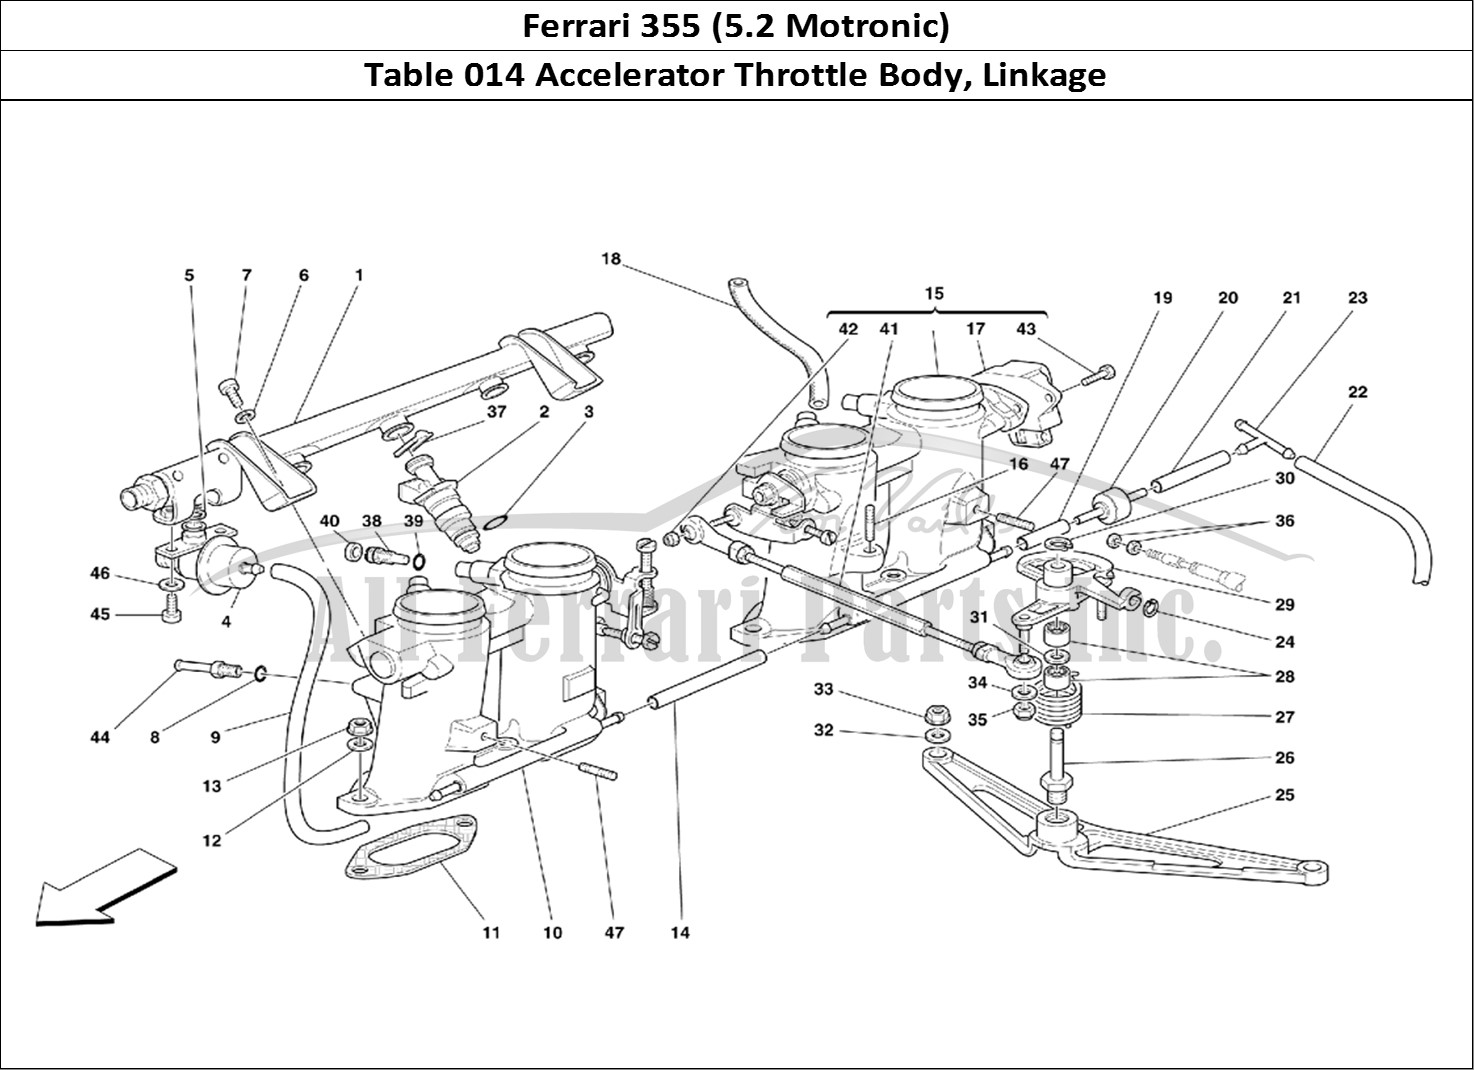 Ferrari Parts Ferrari 355 (5.2 Motronic) Page 014 Throttle Holders and Cont